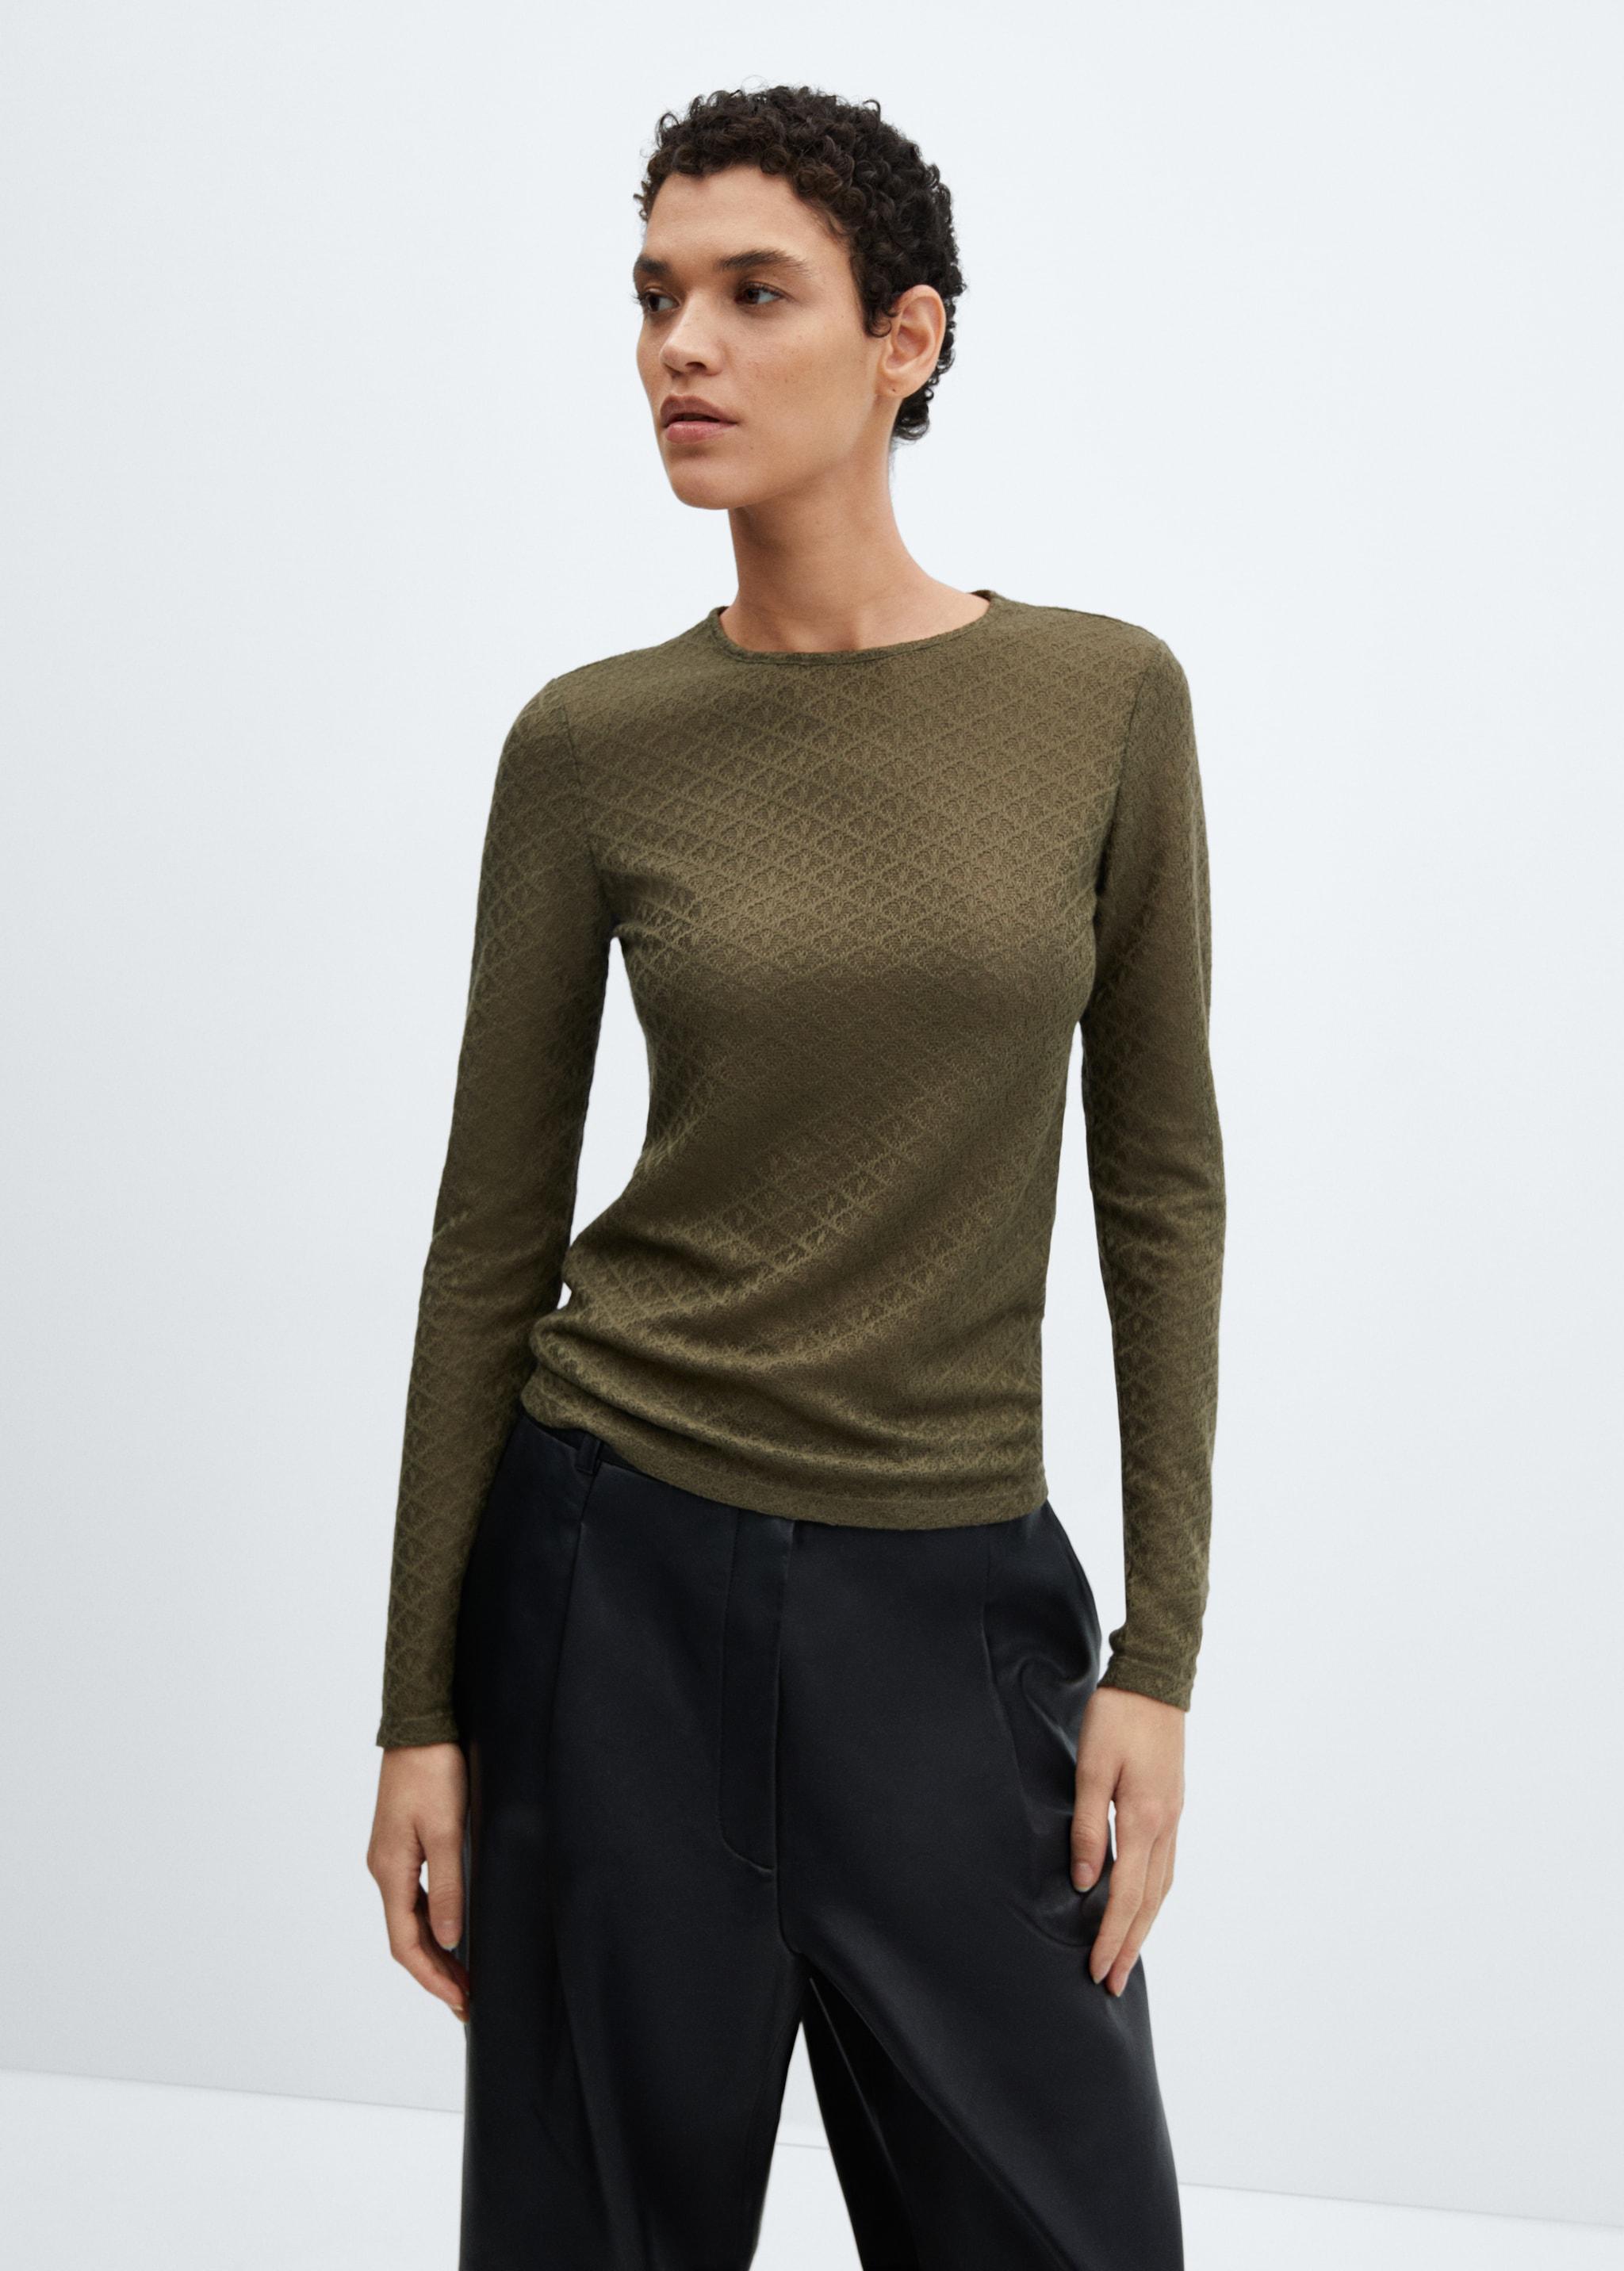 Textured knit t-shirt - Medium plane